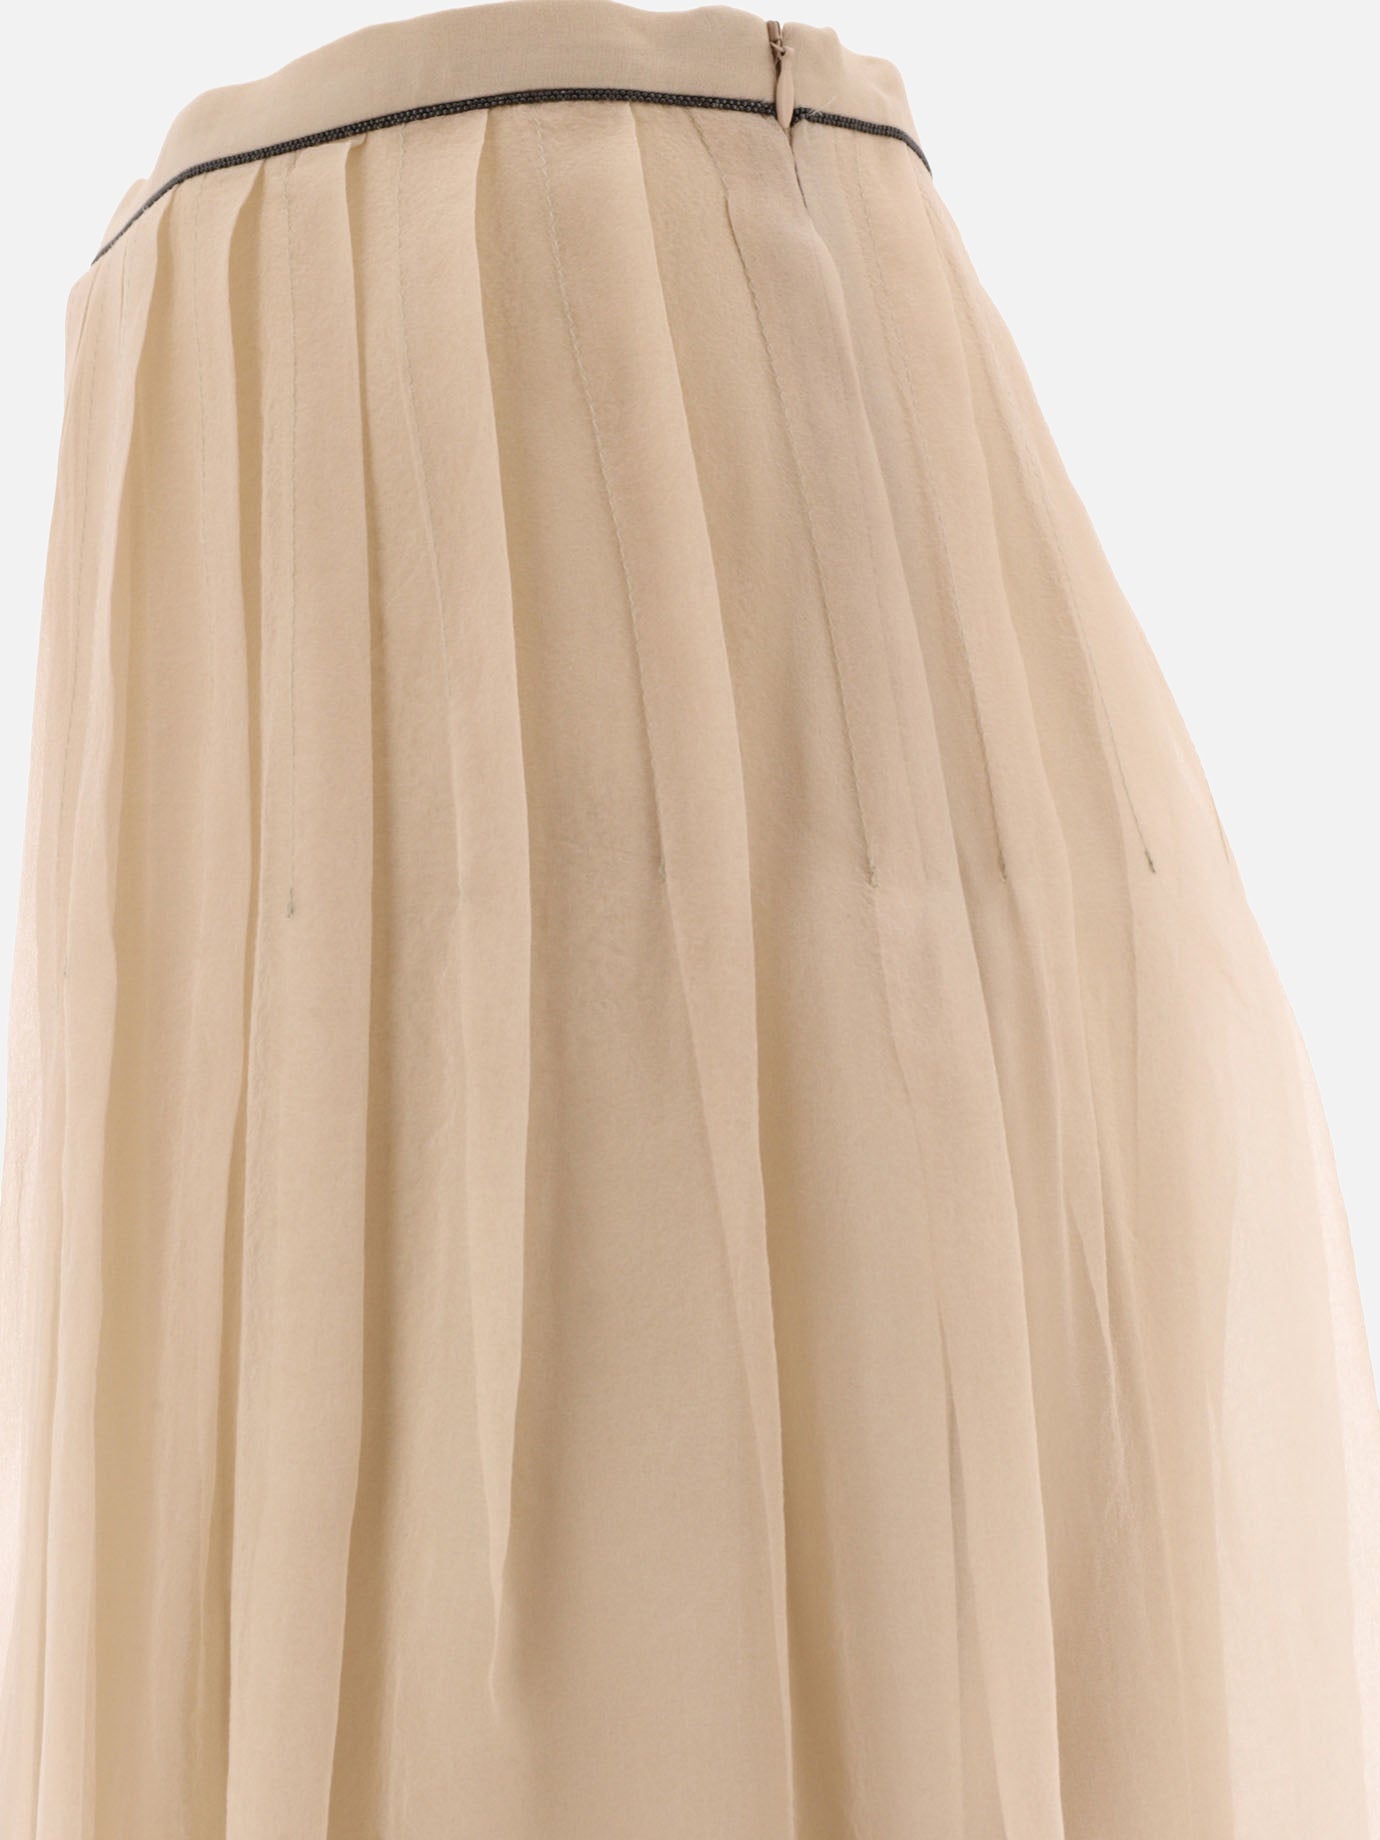 Pleated skirt with shiny waistband